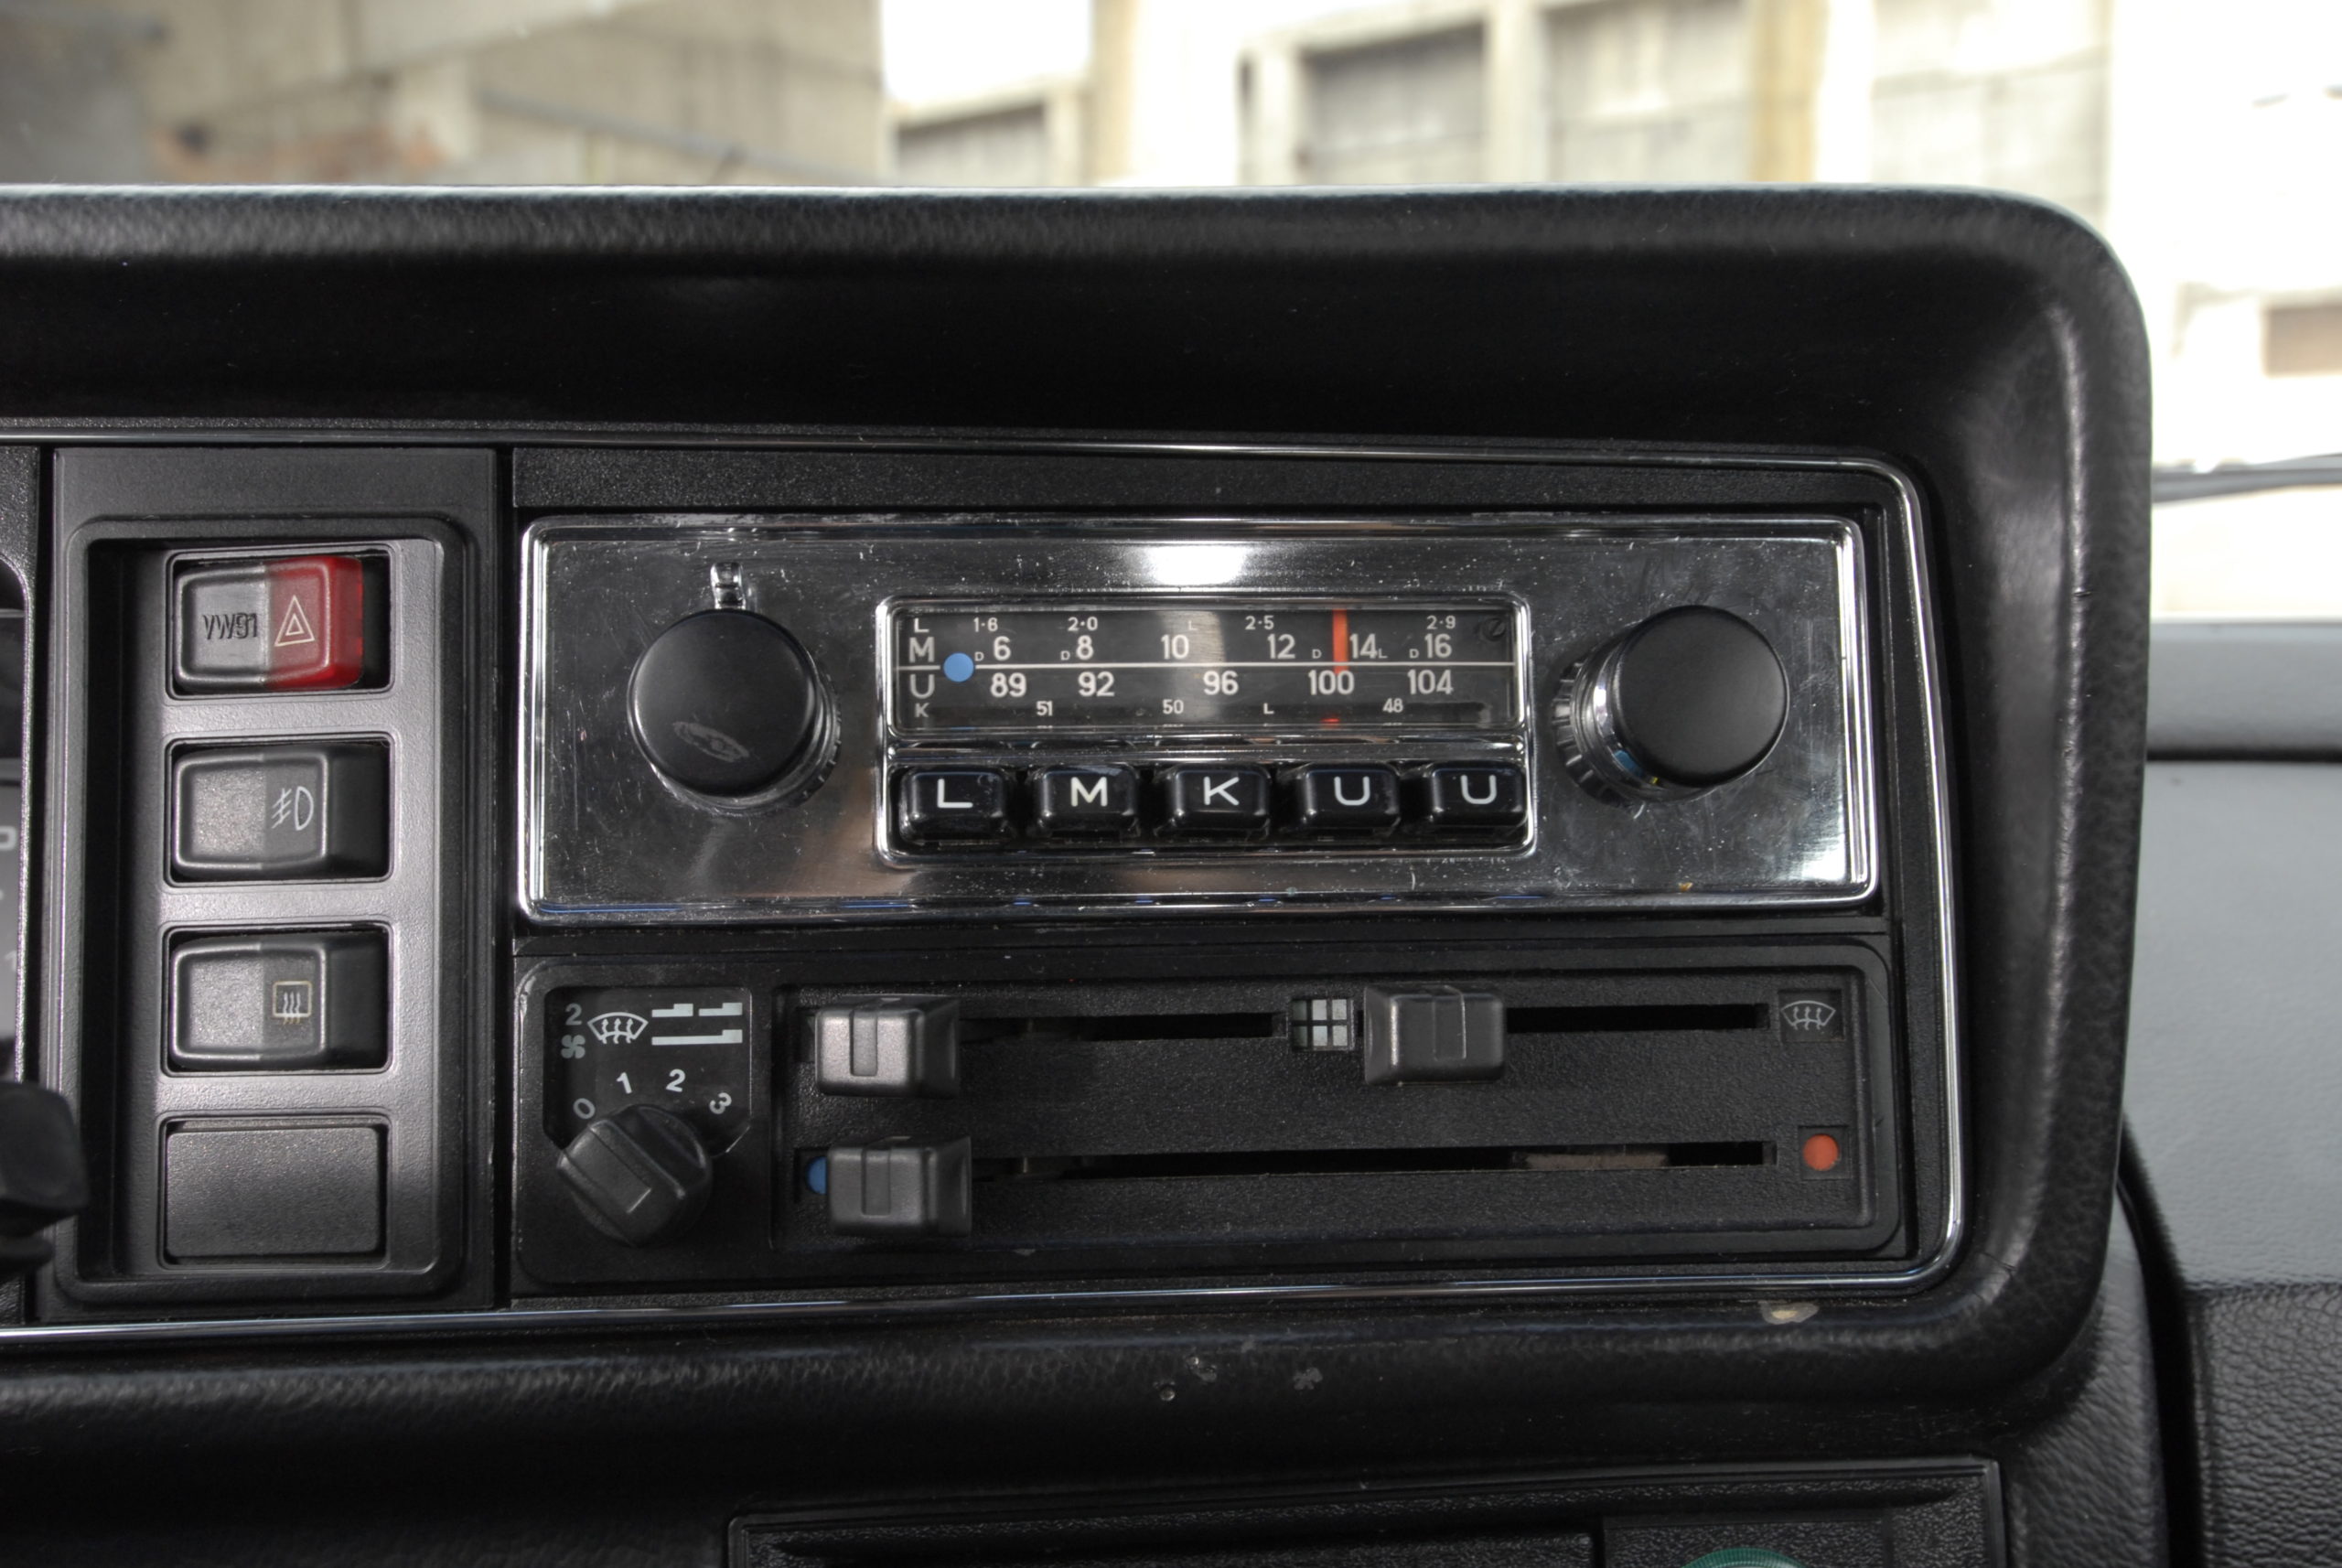 VW Golf Mk 1 Pirelli radio Blaupunkt